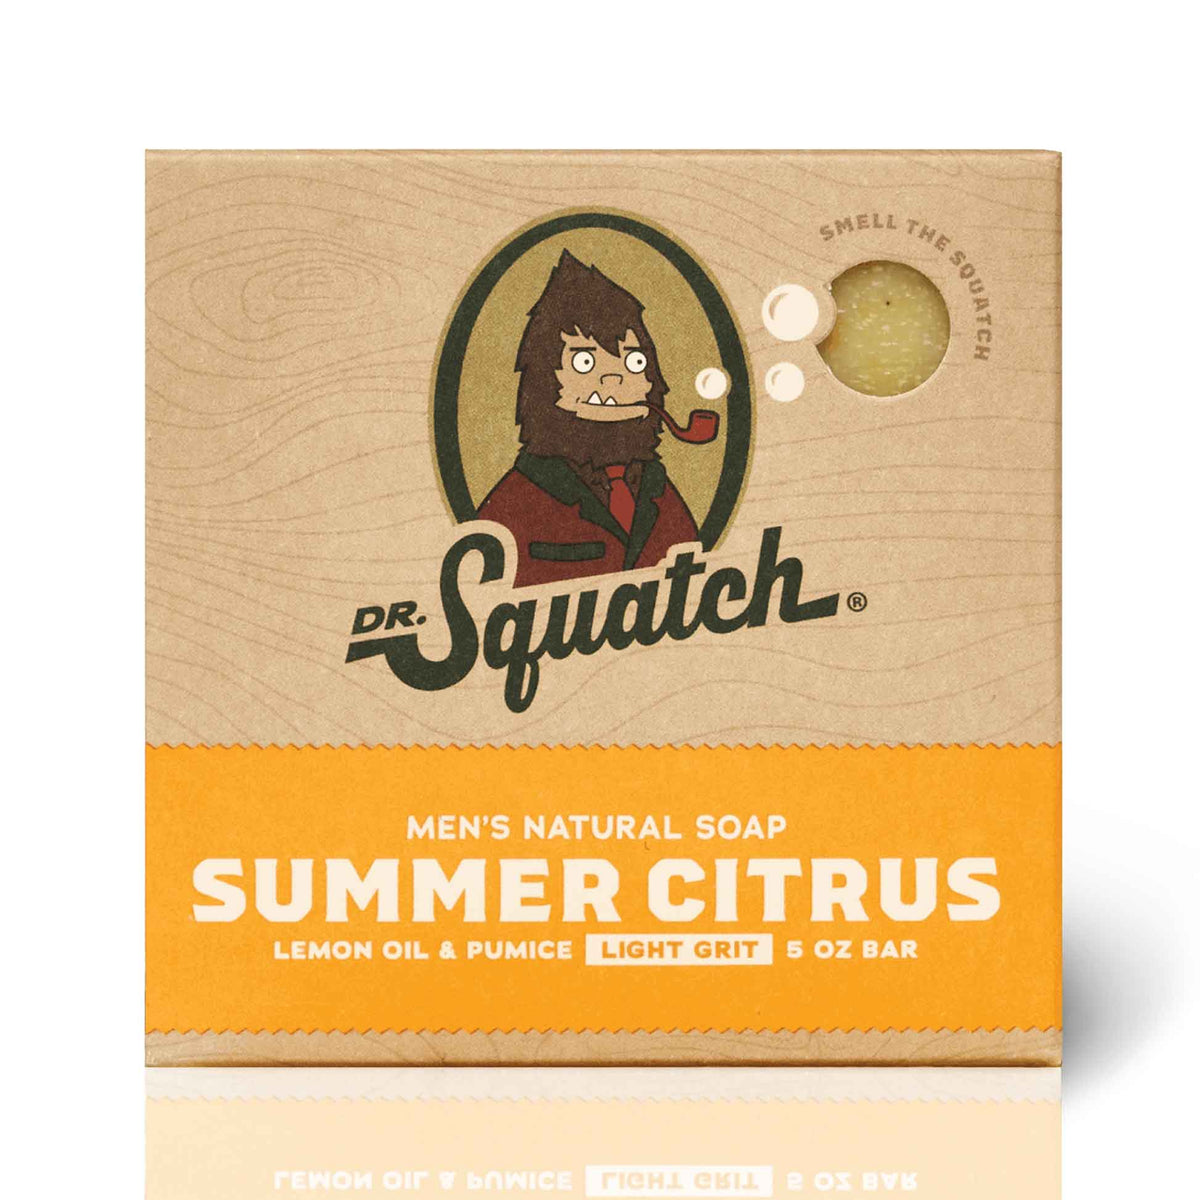 Dr. Squatch - Cedar Citrus